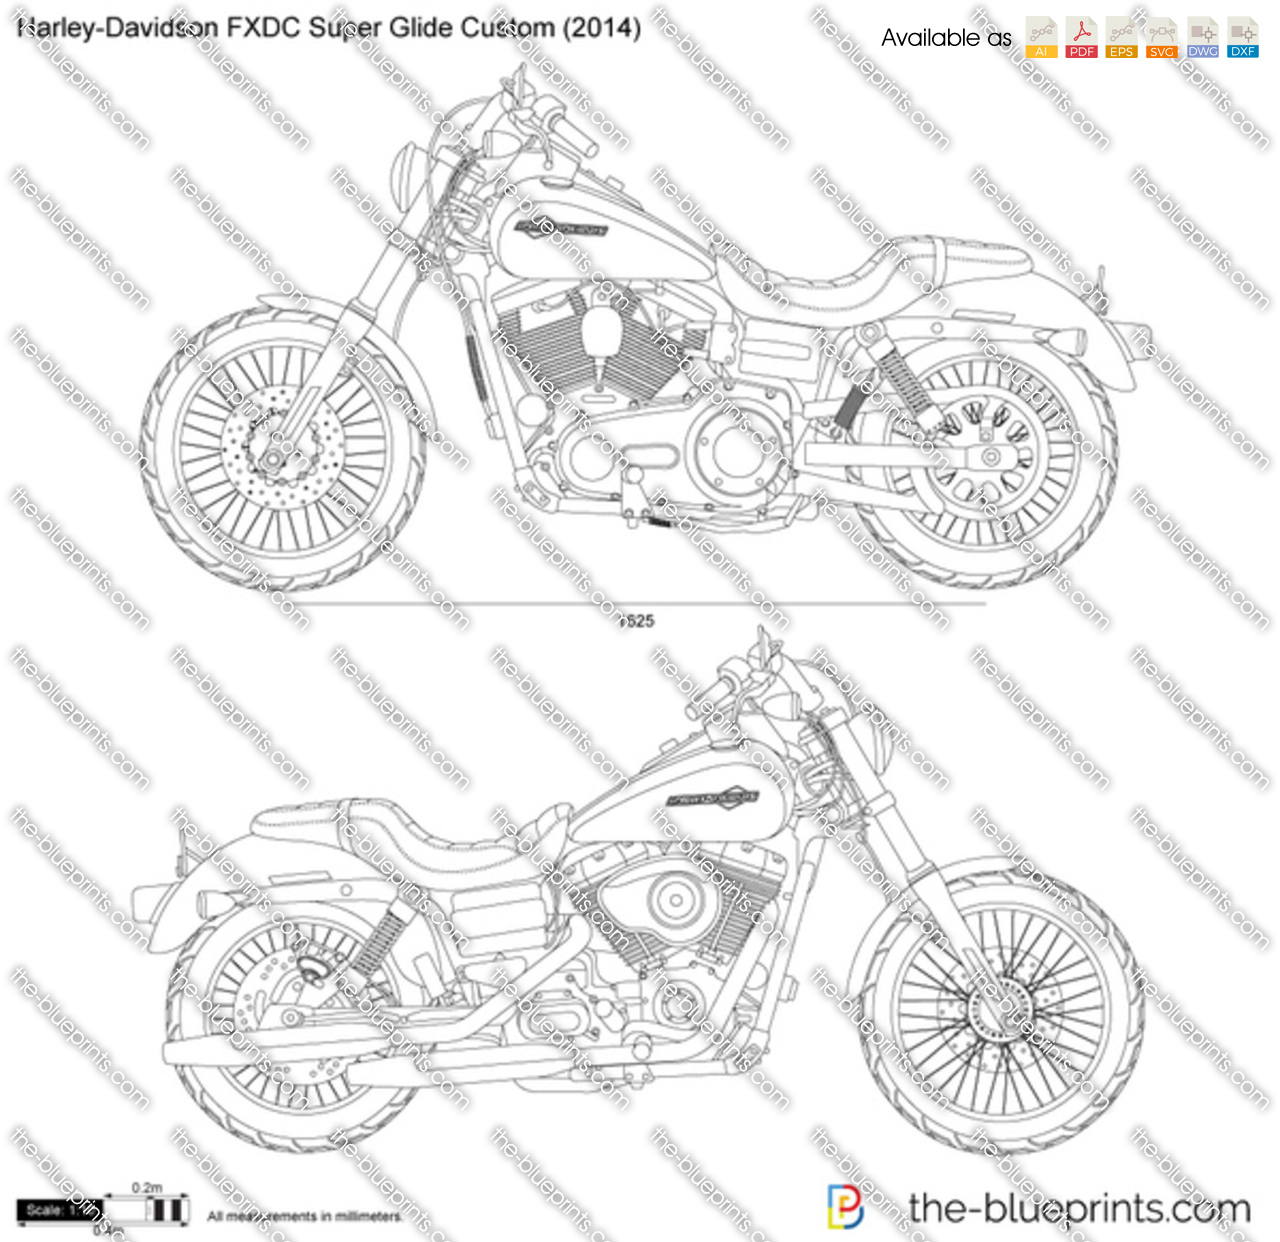 Harley-Davidson FXDC Super Glide Custom